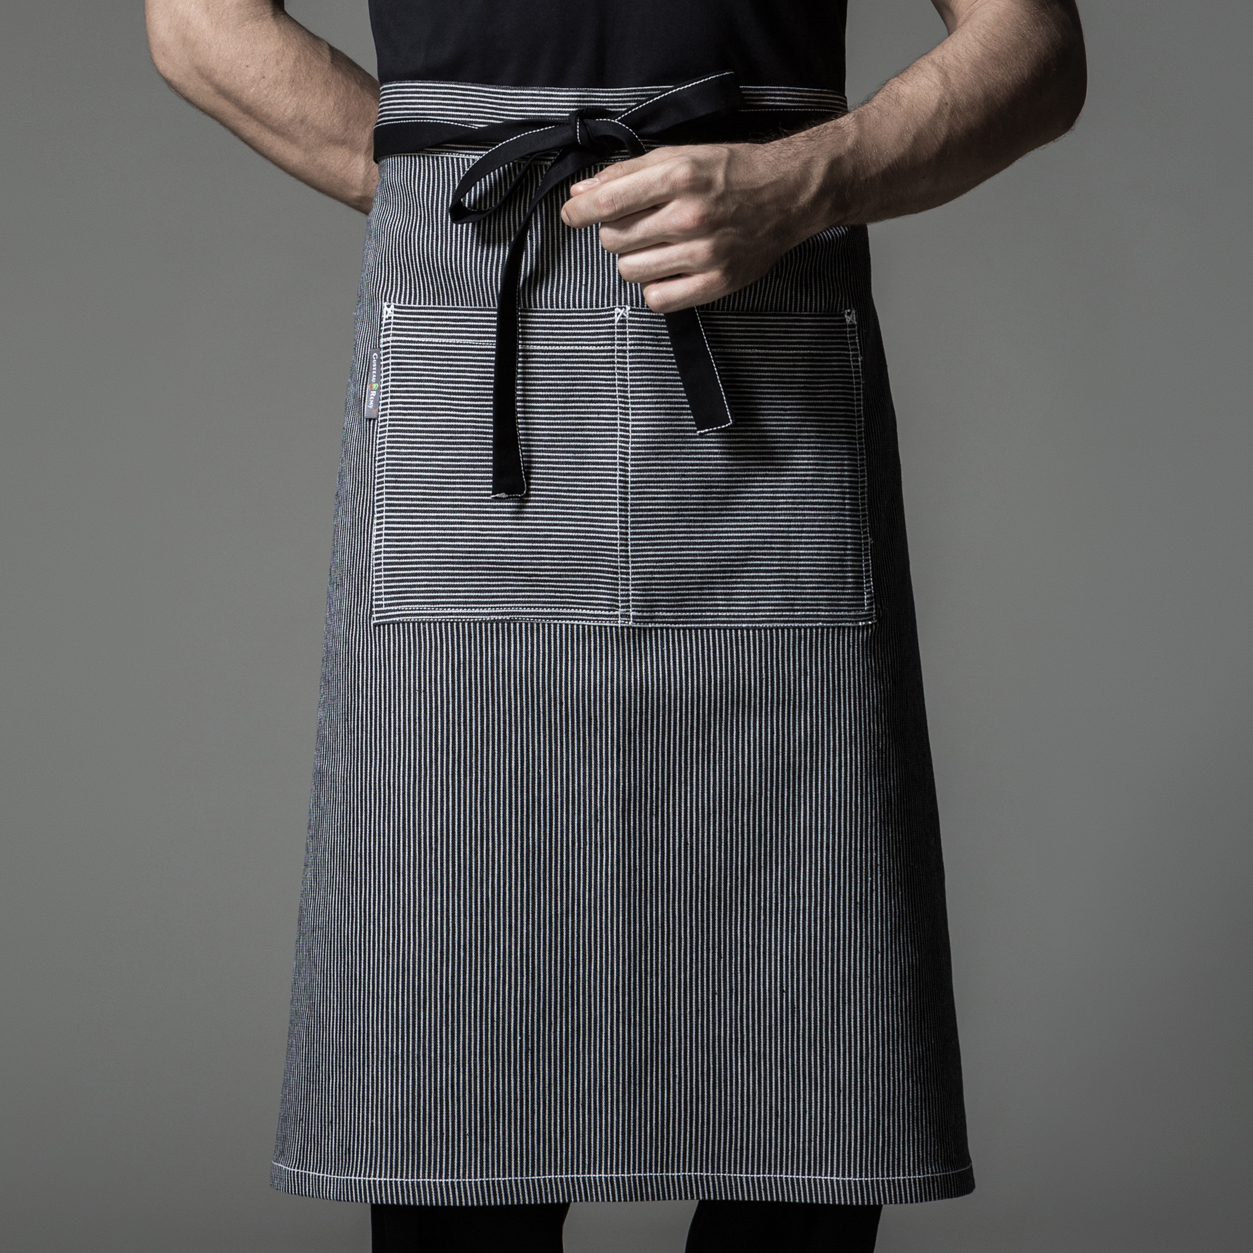 hot sale American restaurant denim Chef apron waiter apron